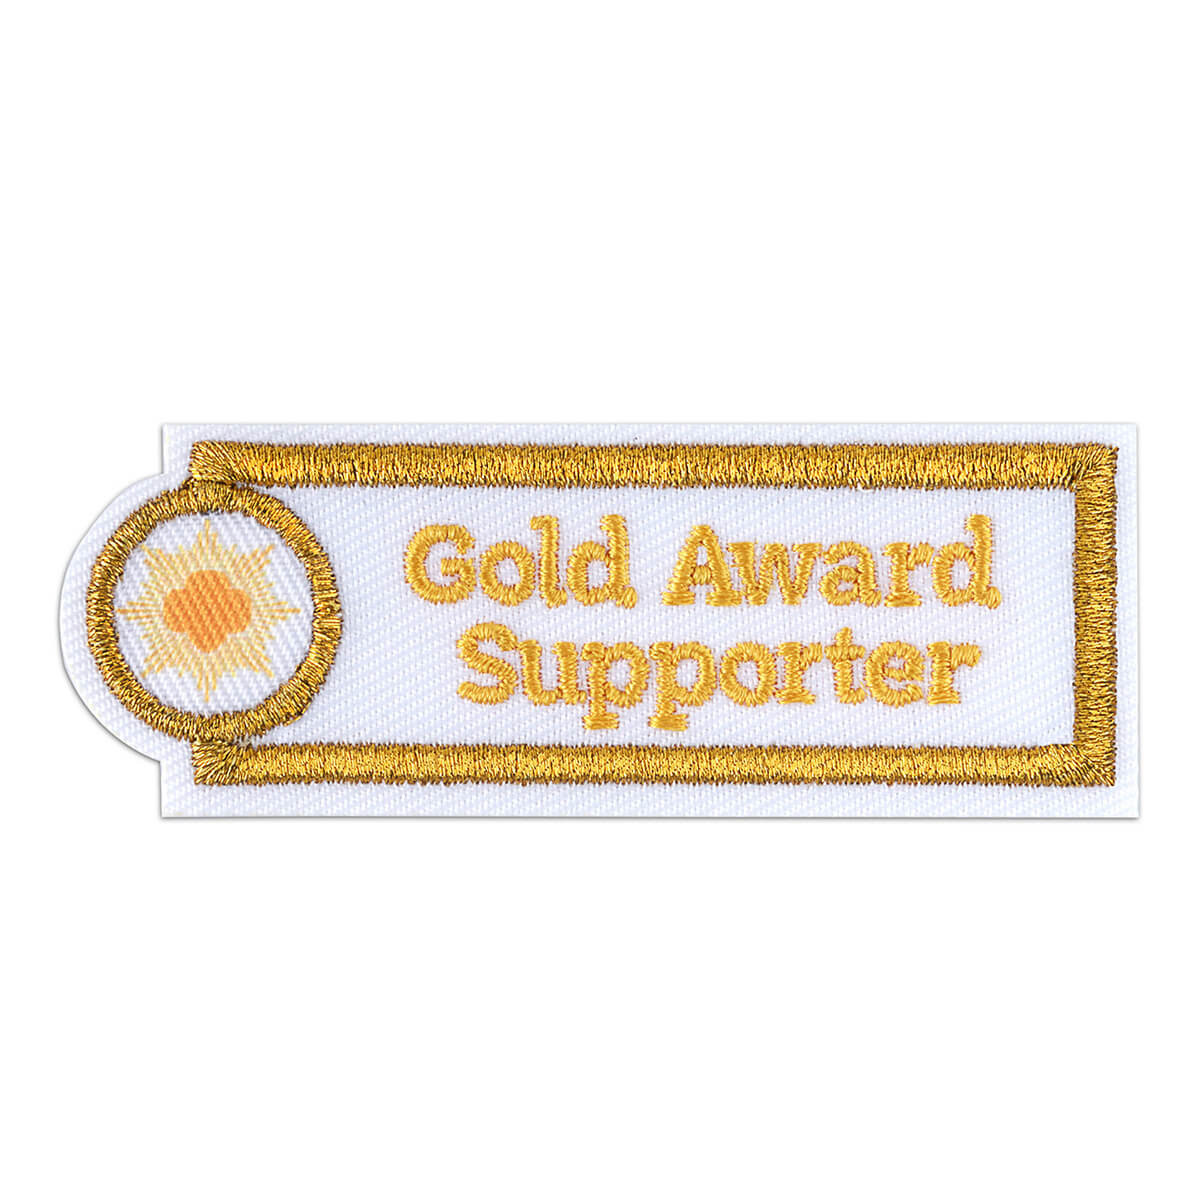 AAP - Gold Award Supporter 